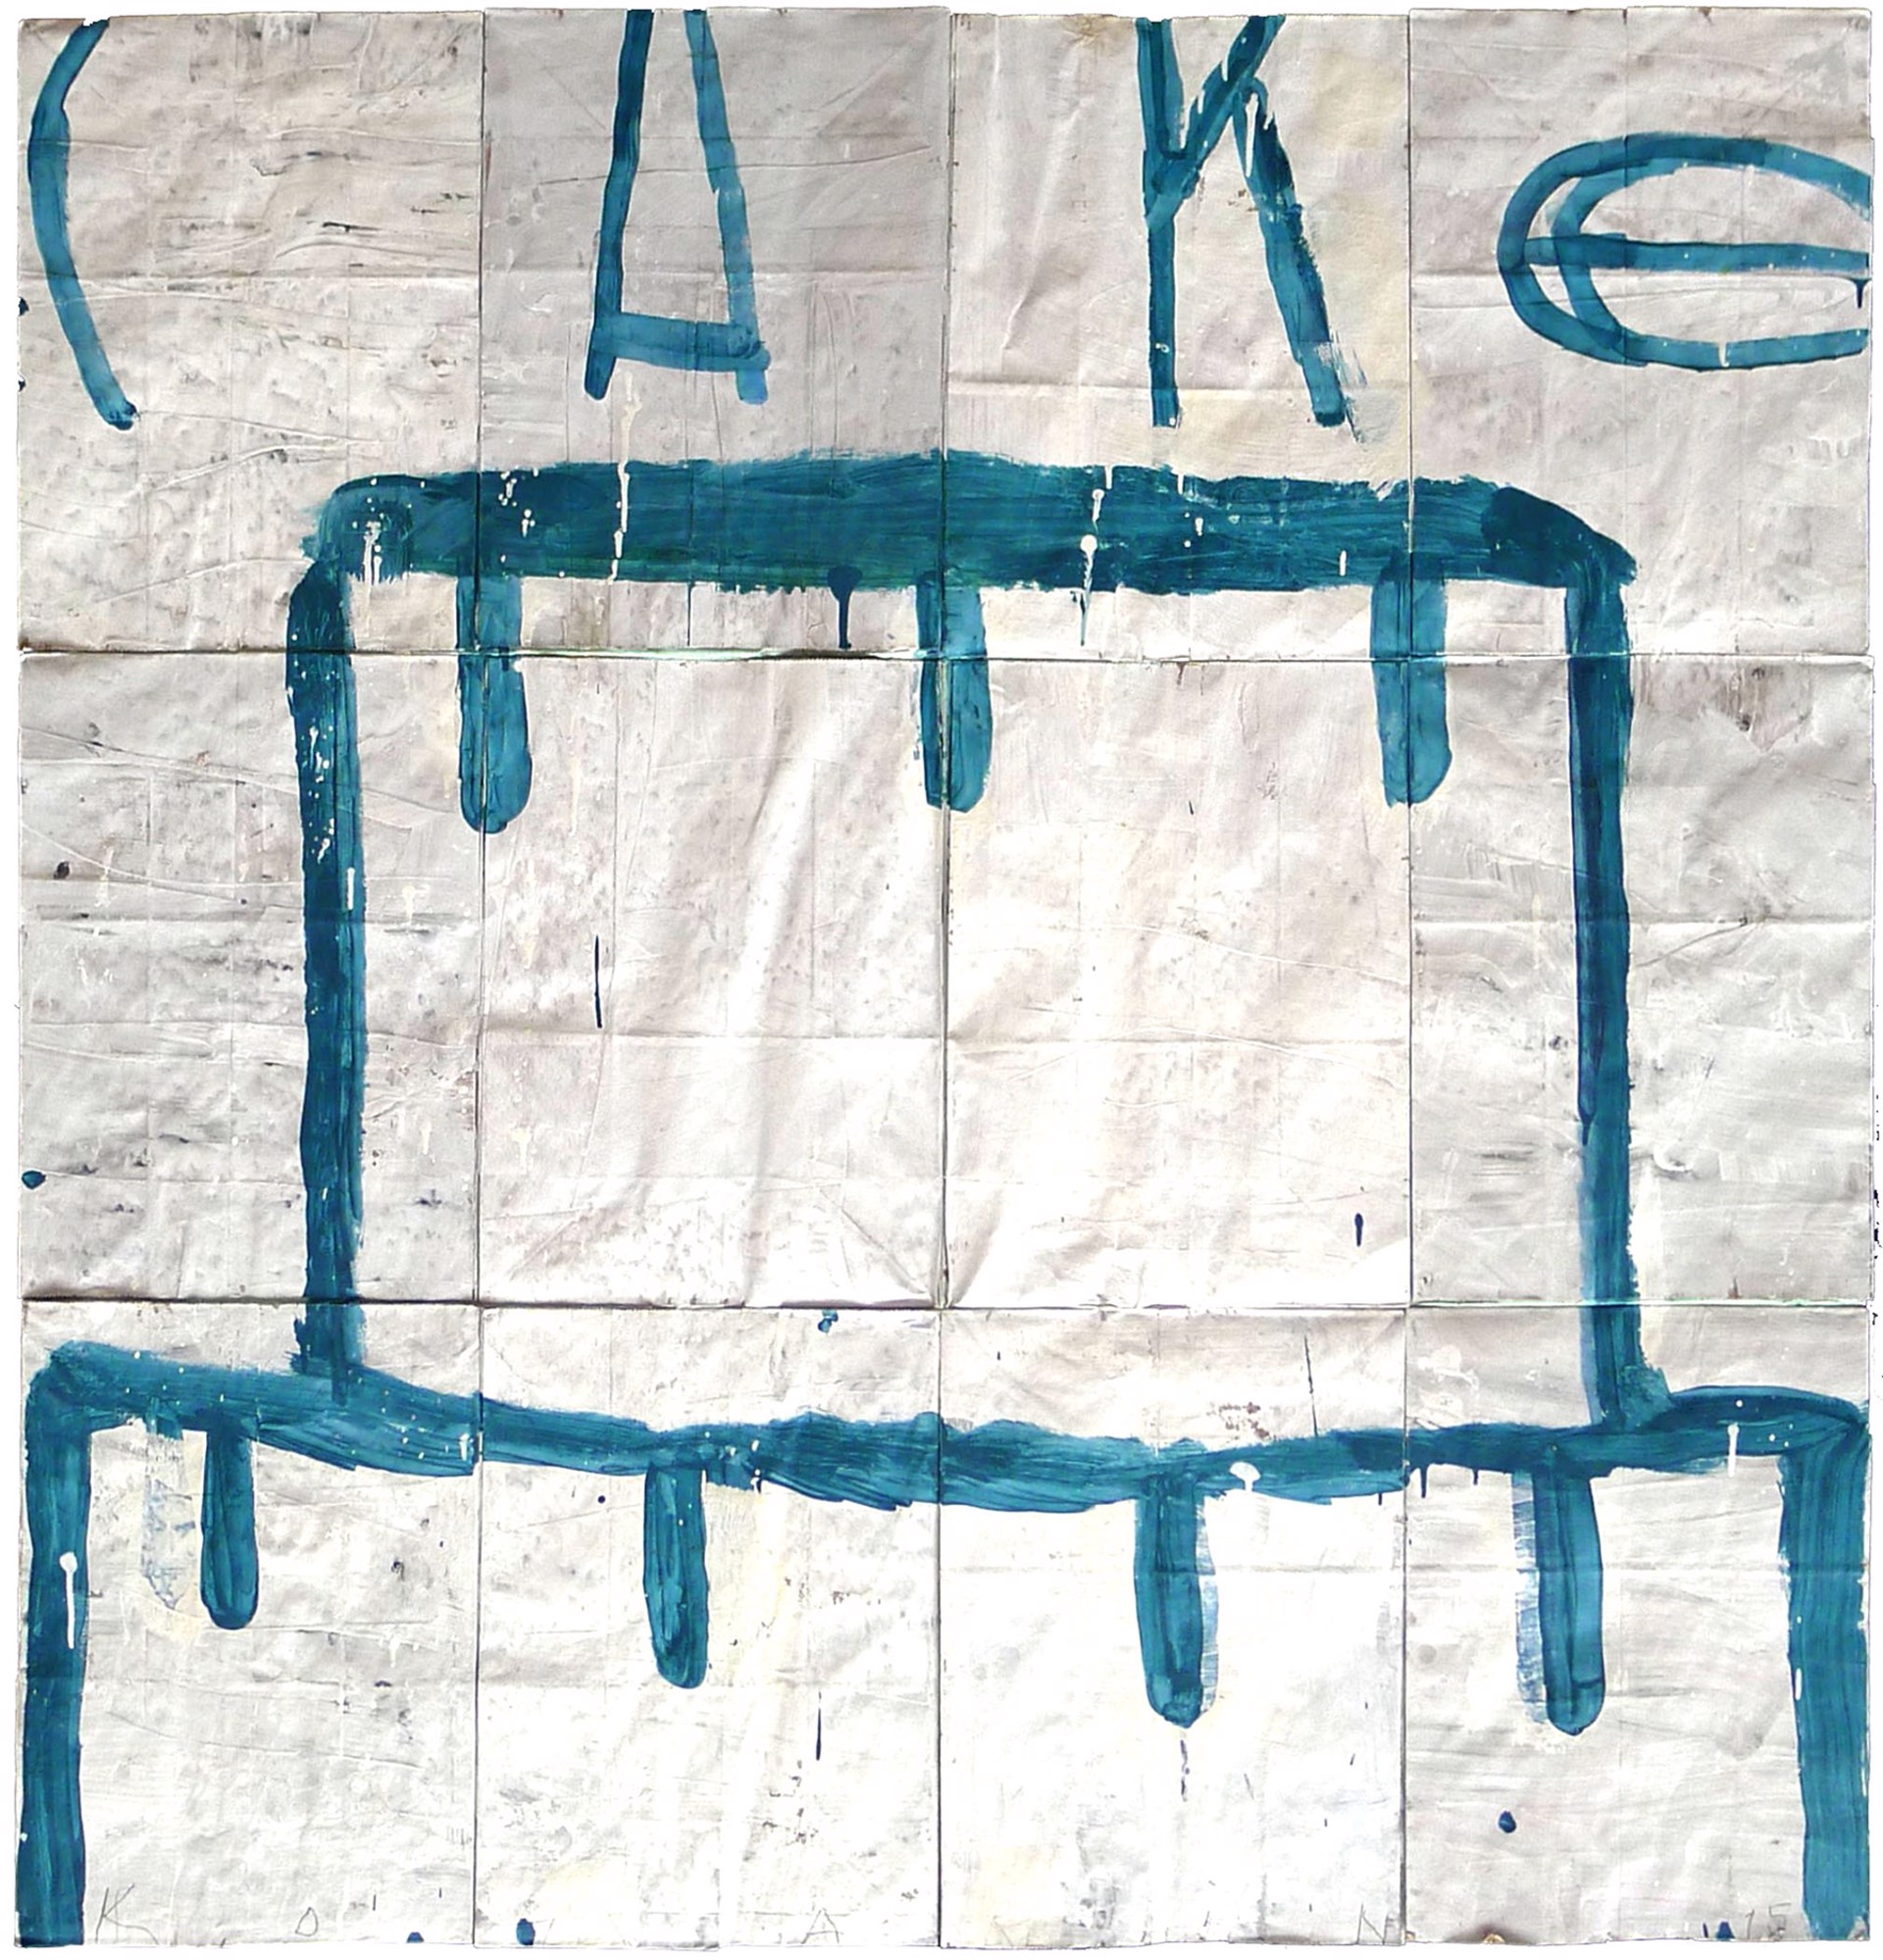 Cake, Double Stack (Aqua on White) by Gary Komarin